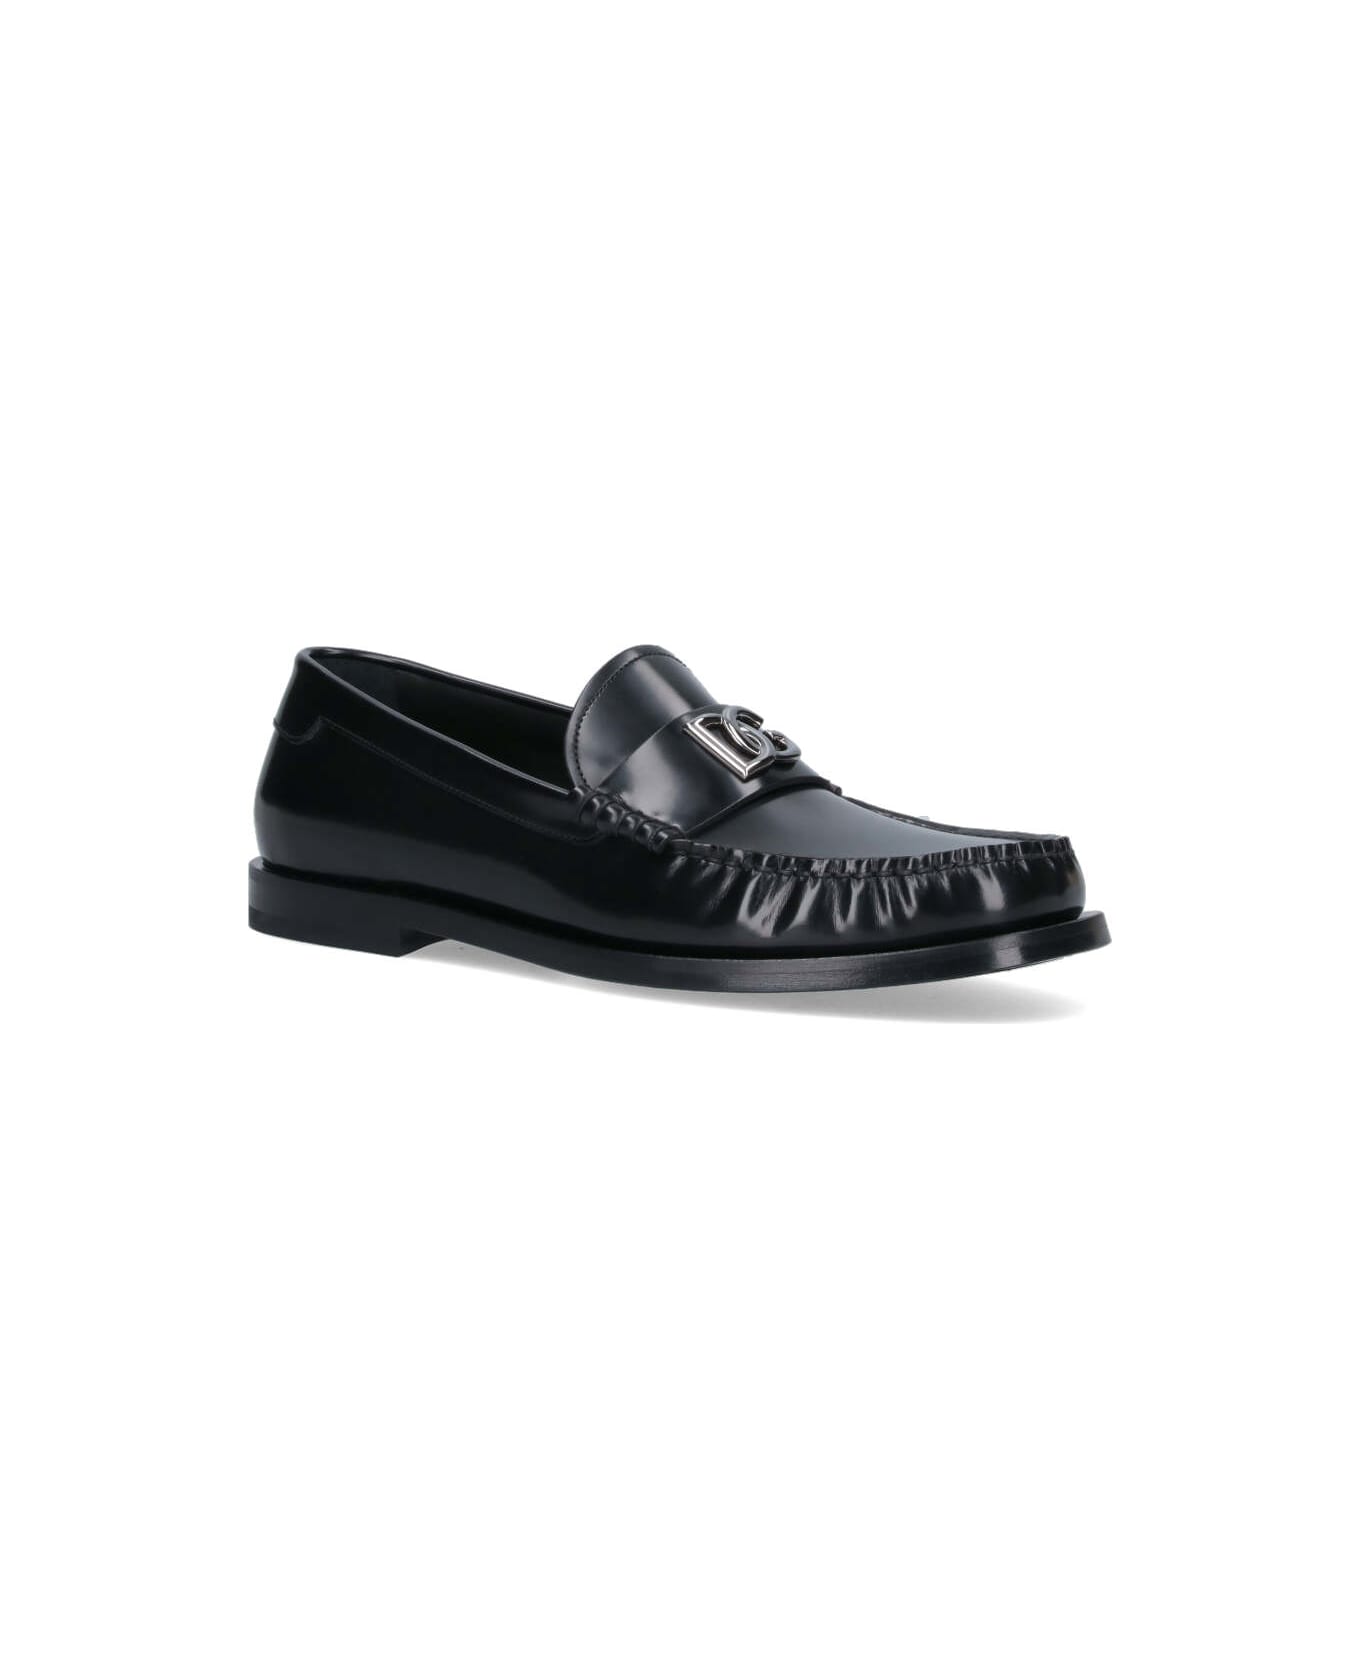 Dolce & Gabbana 'dg' Loafers - Black  